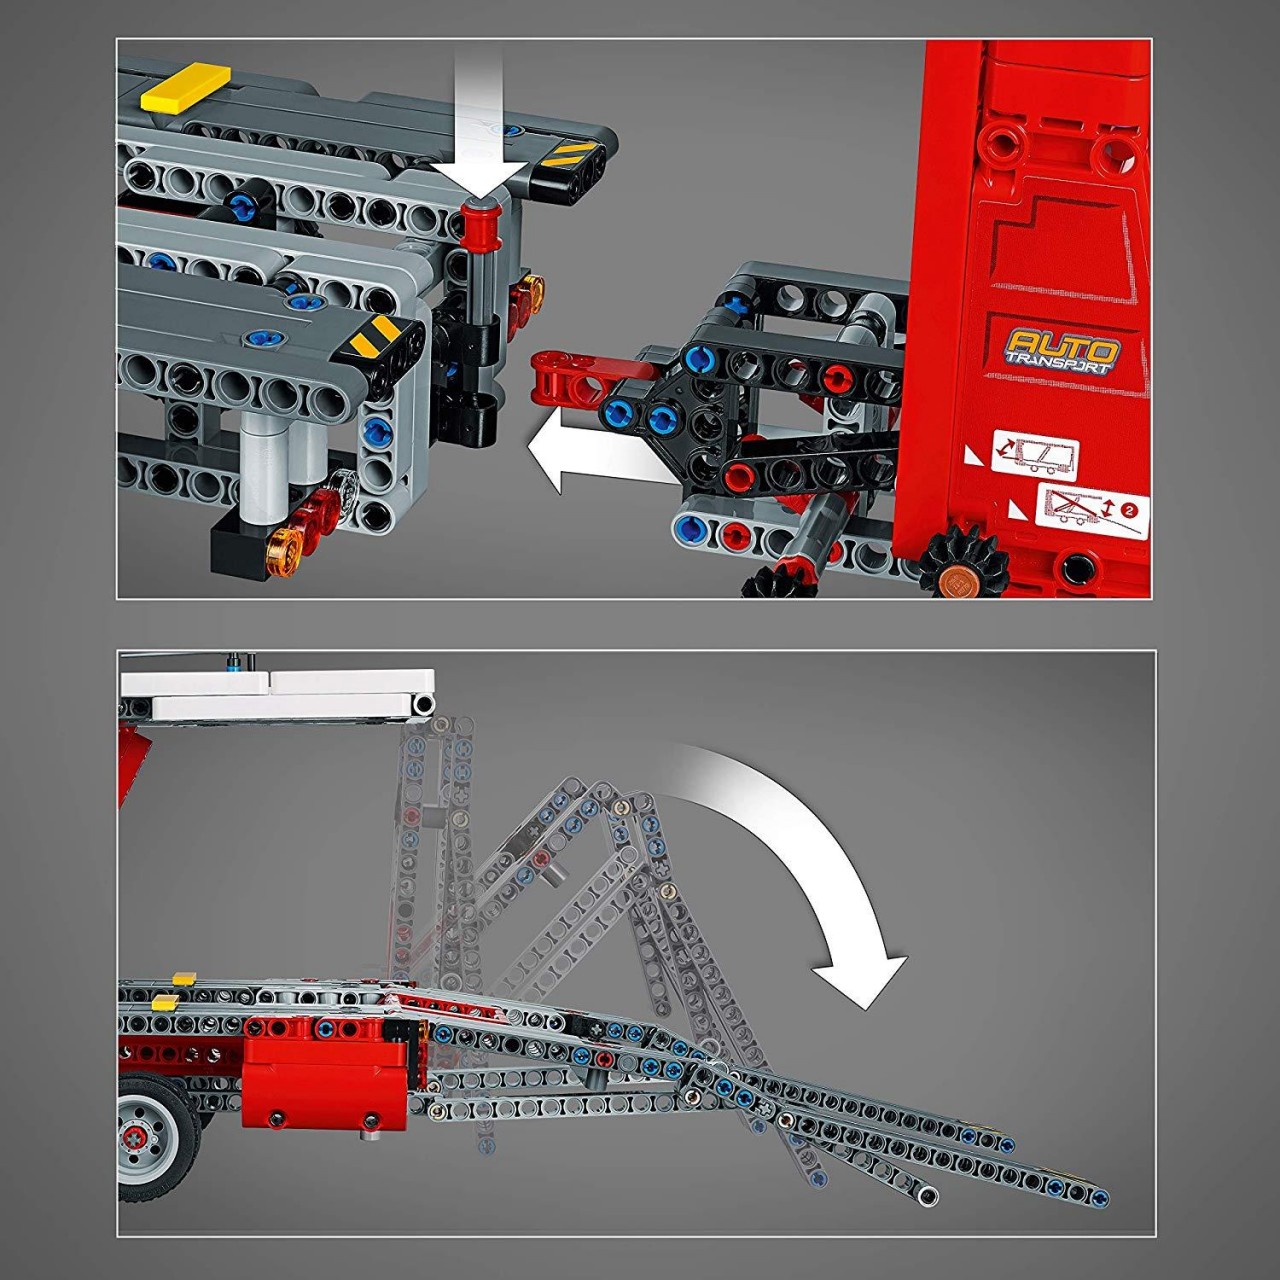 LEGO TECHNIC 42098 Autotransporter